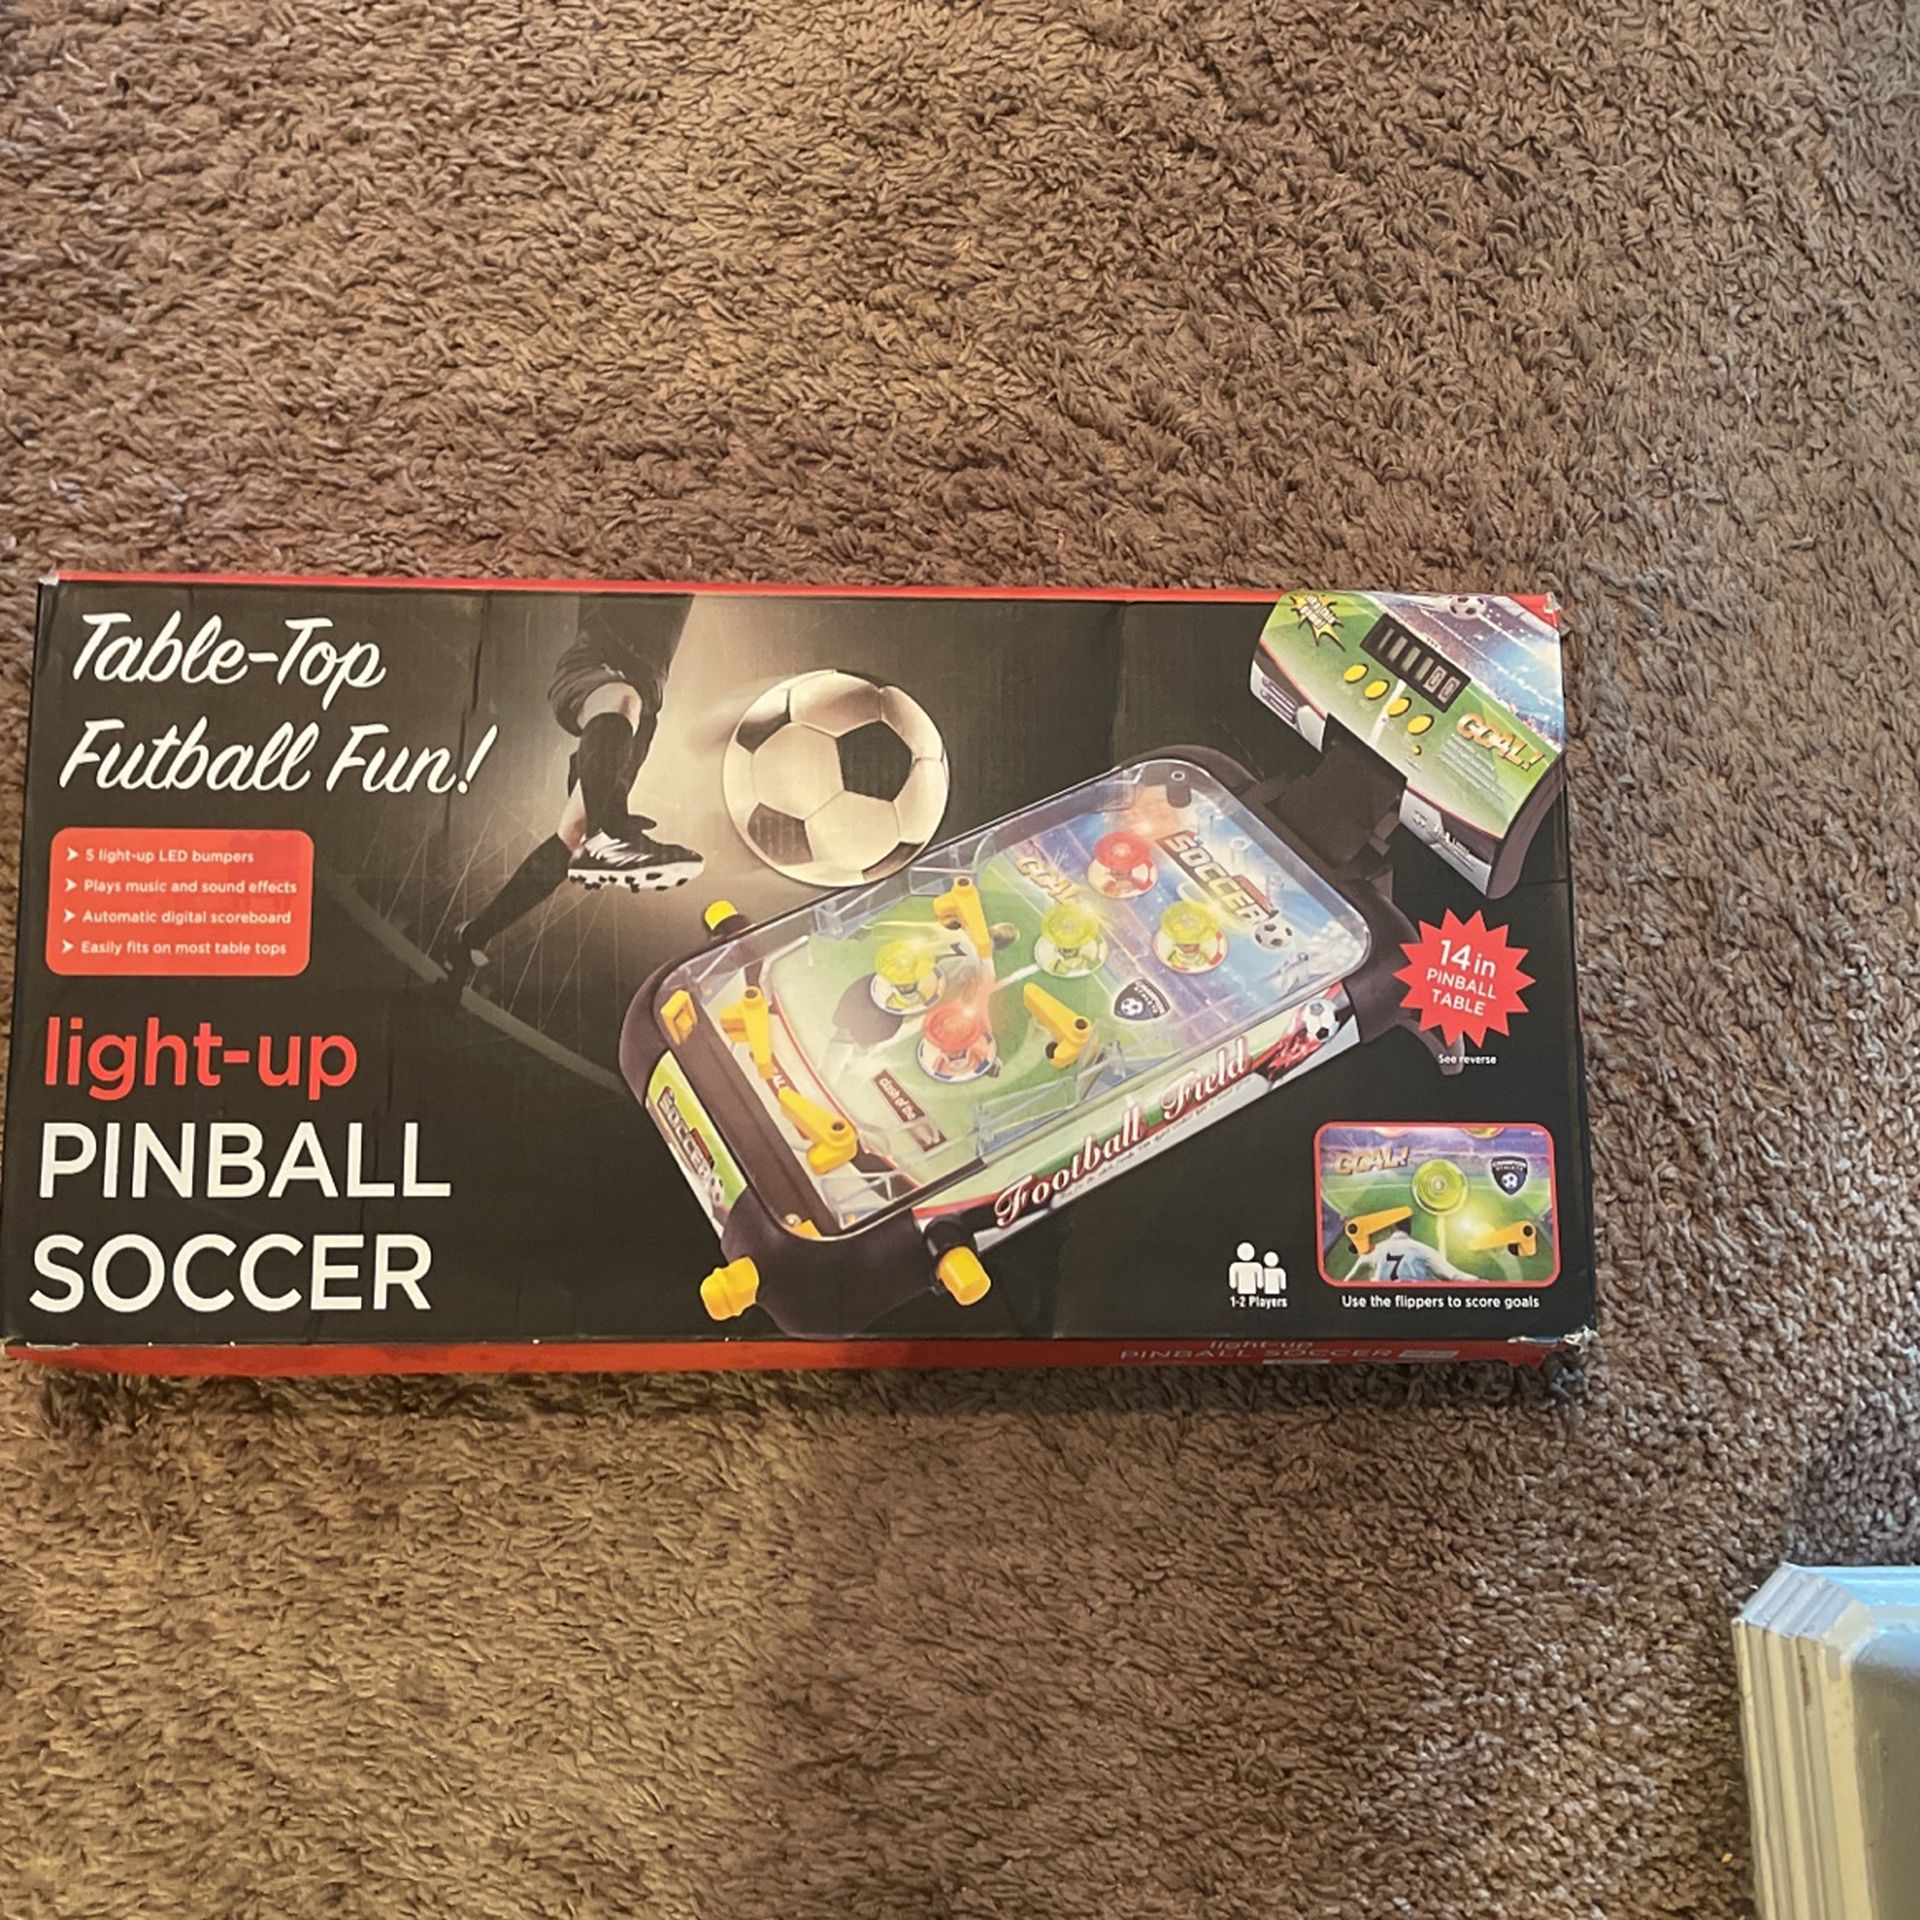 Electric Pinball Game